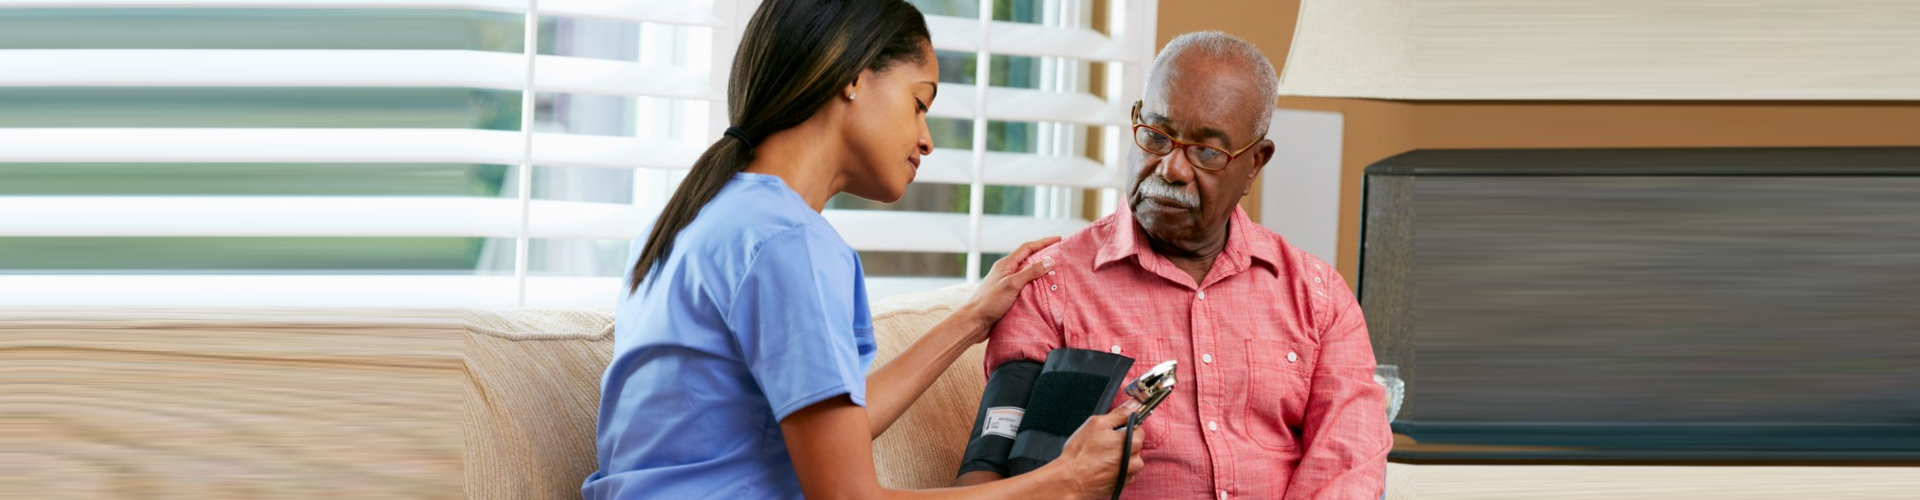 woman checking senior man's blood pressure